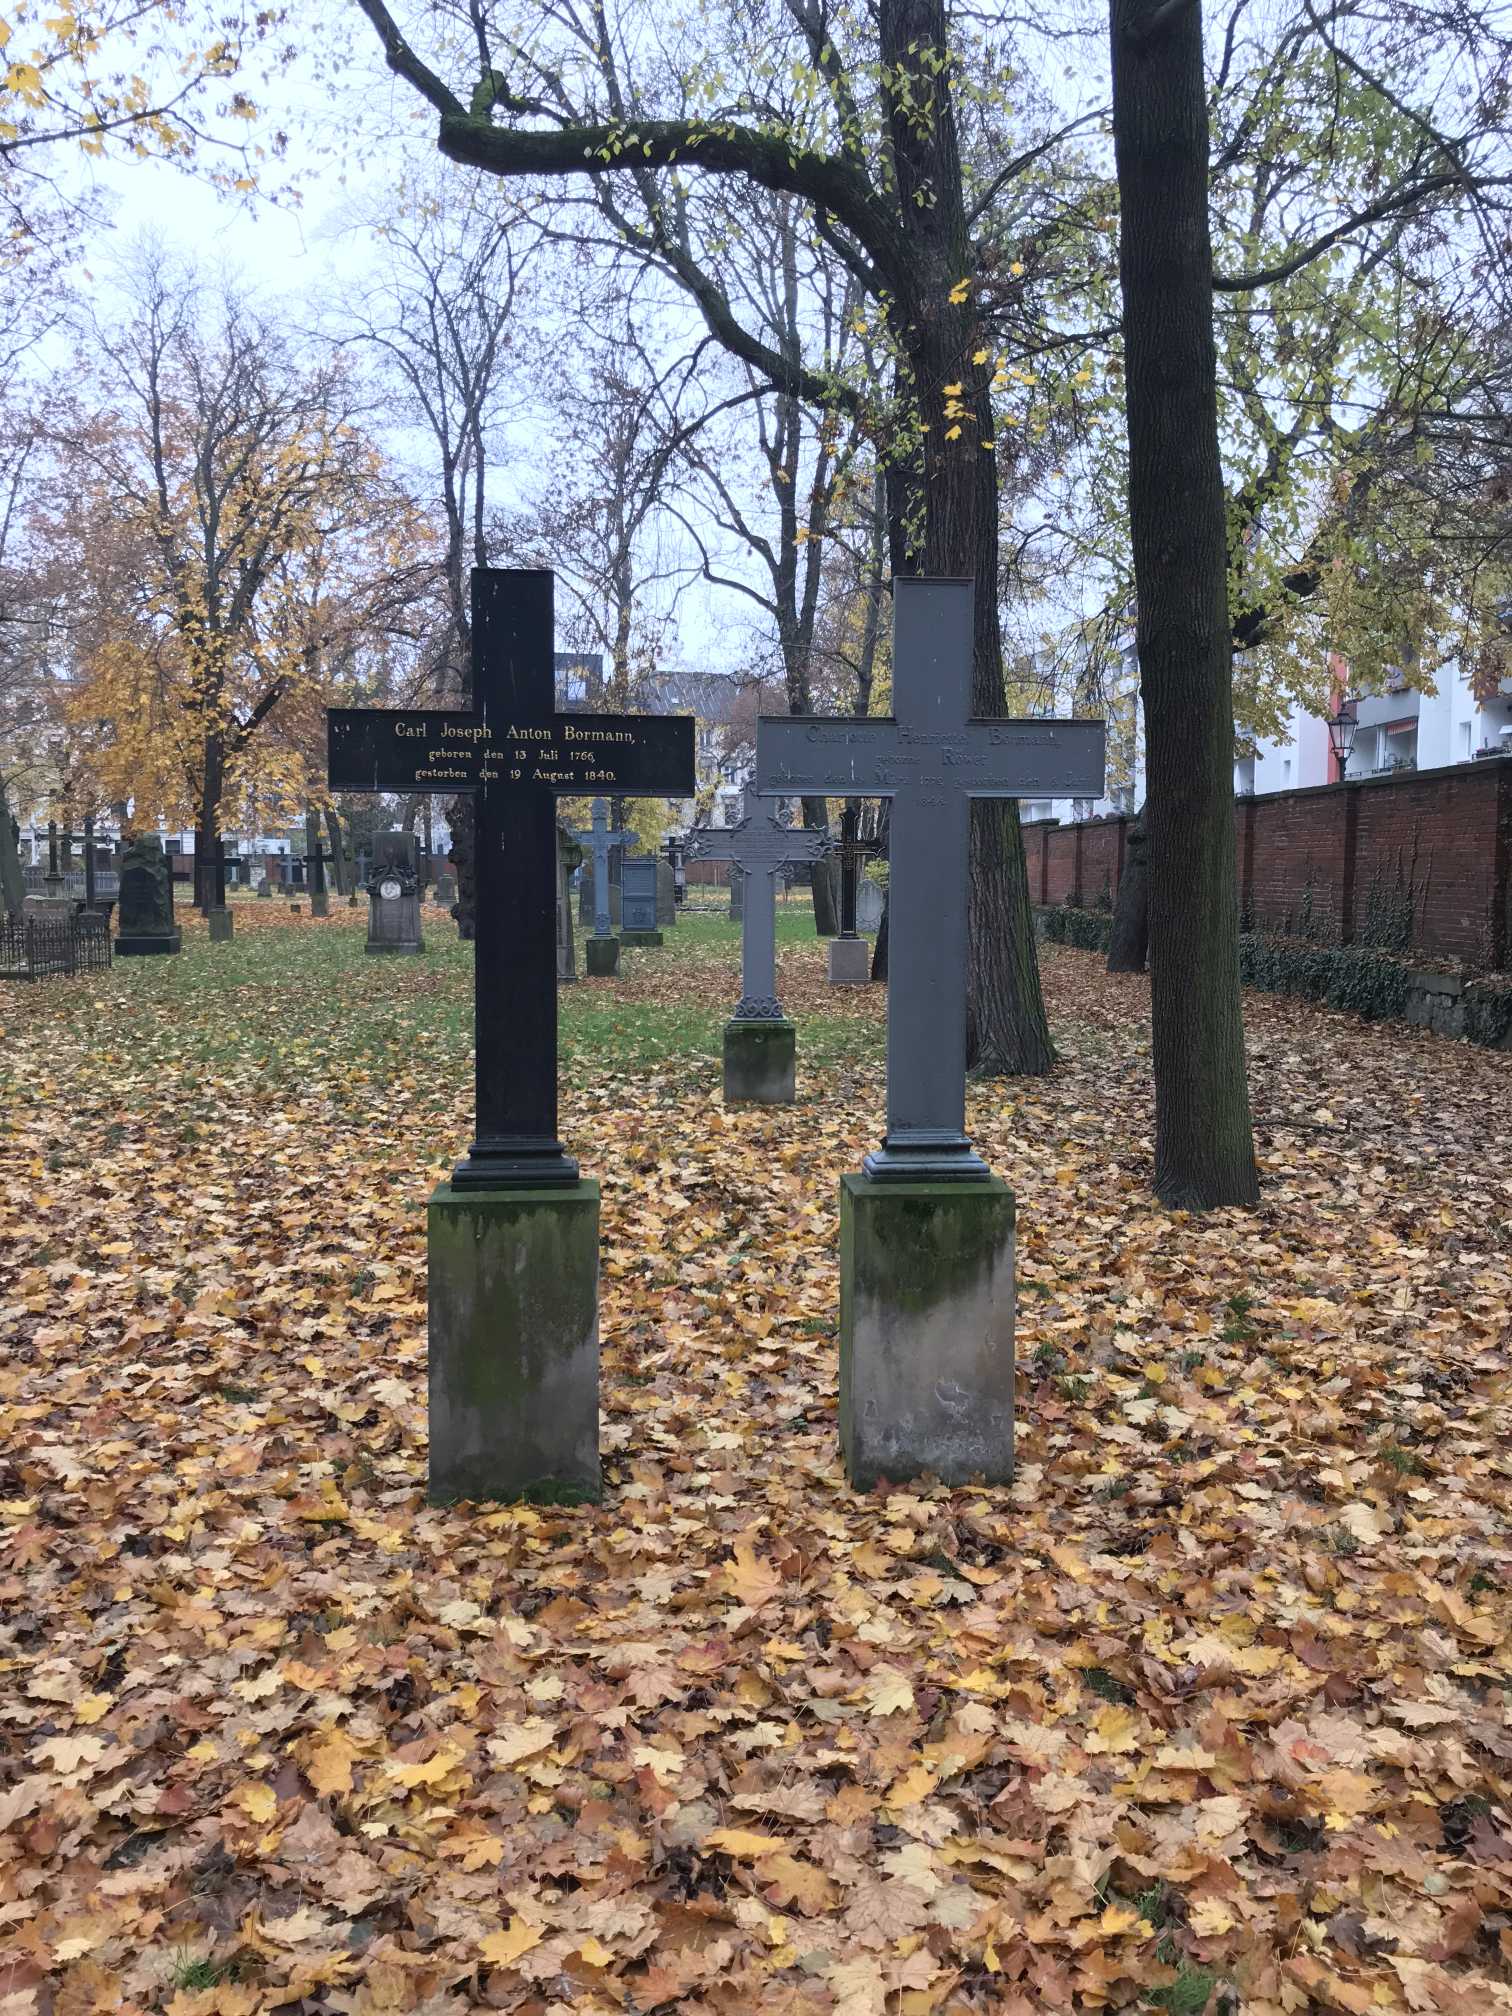 Grabstein Carl Joseph Anton Bormann, Alter Garnisonfriedhof Berlin